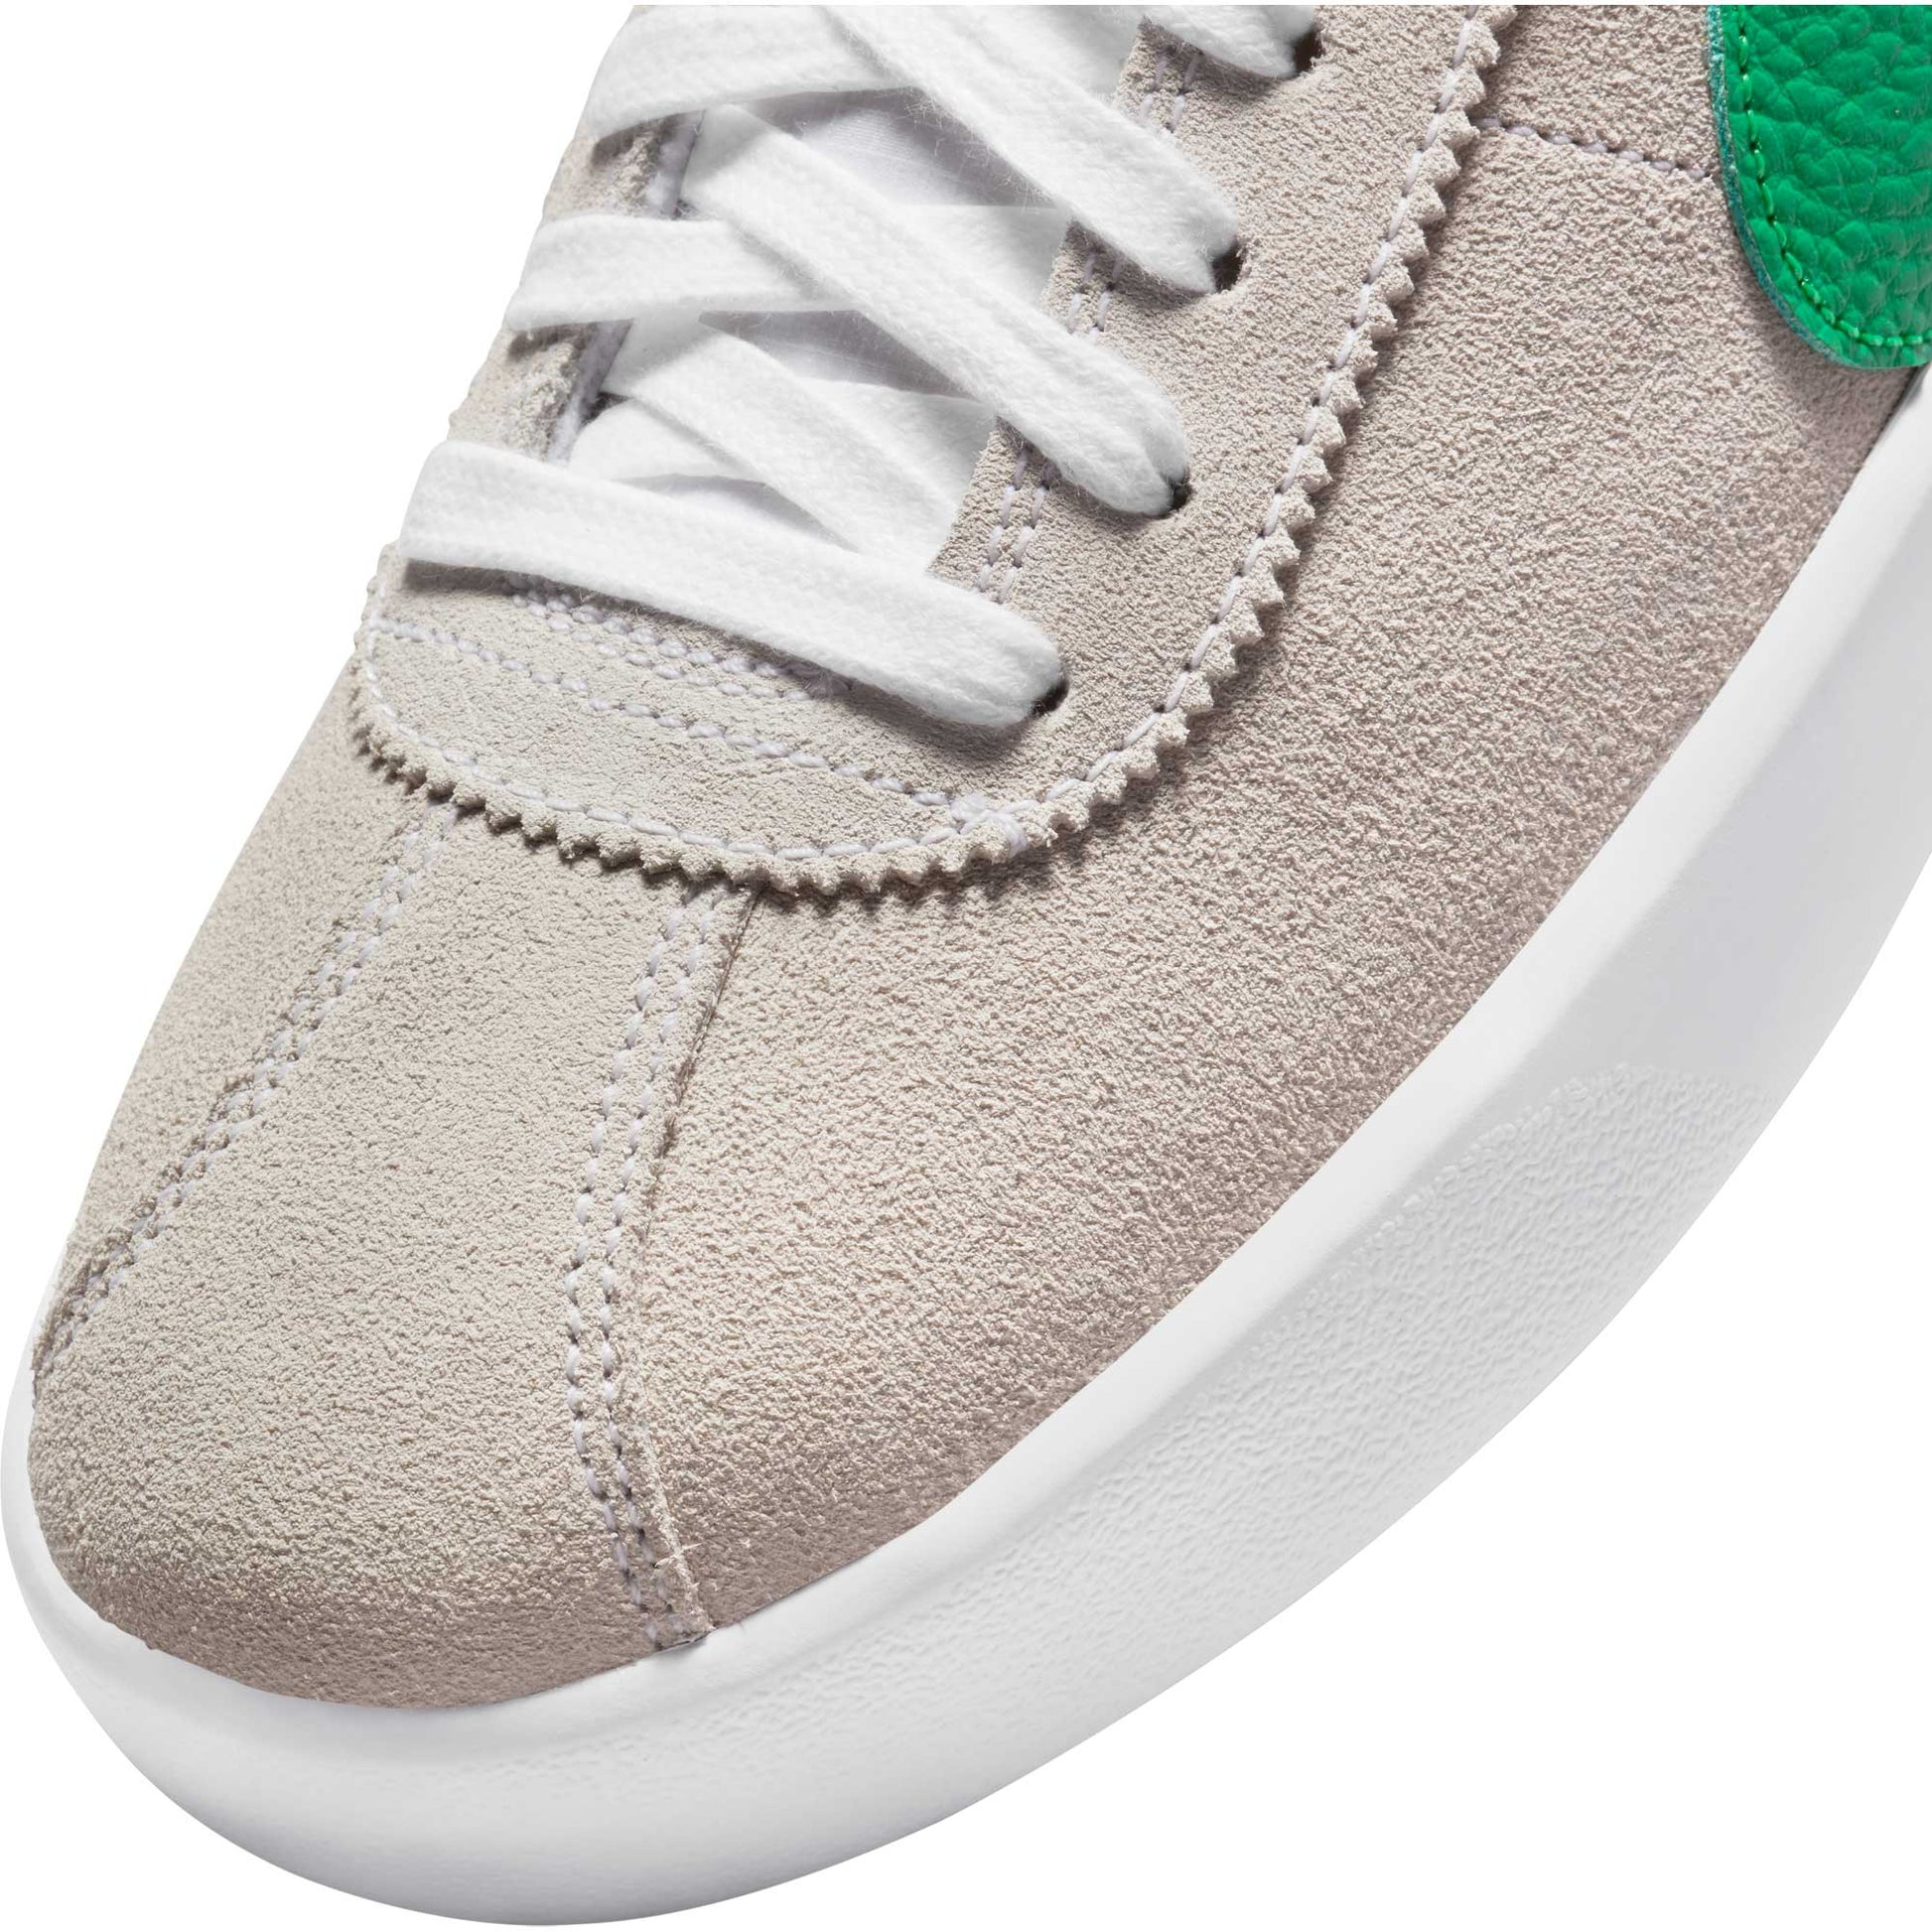 Nike SB Bruin React, white/lucky green-white-lucky green - Tiki Room Skateboards - 9